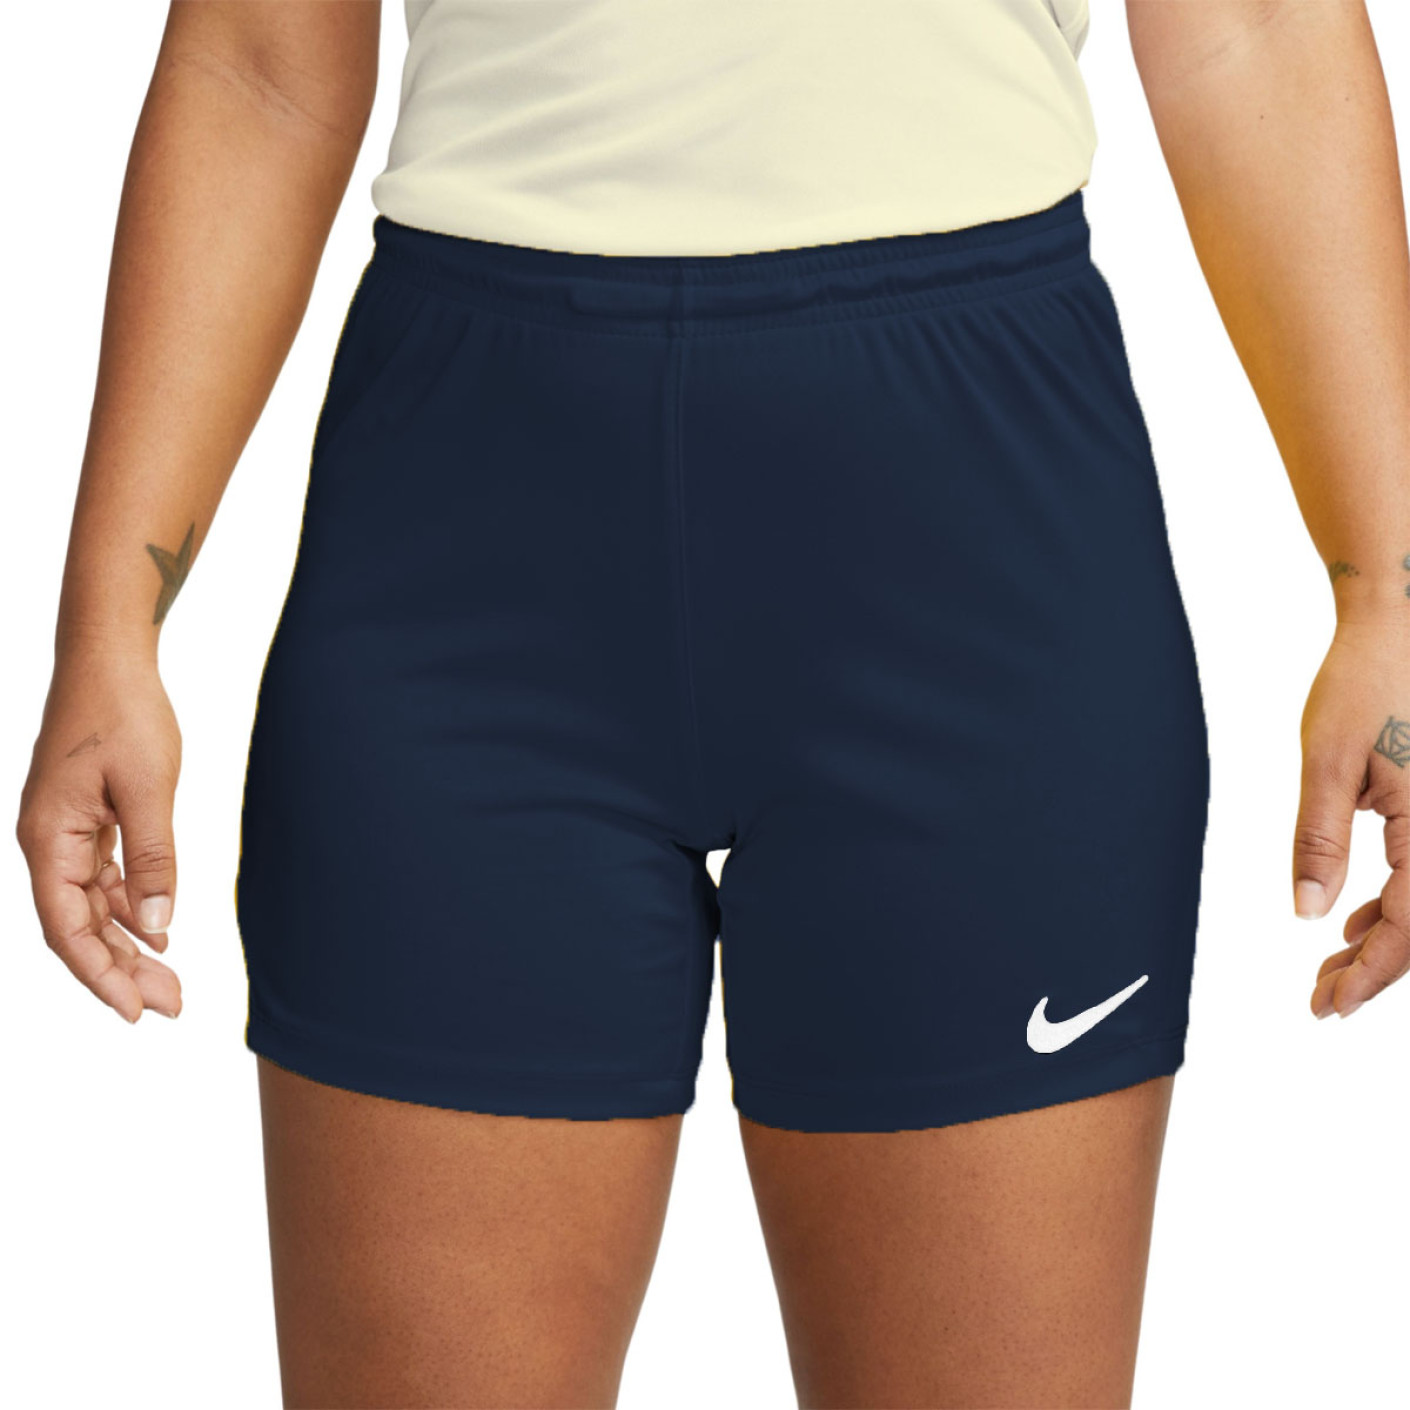 Nike Dry Park III Voetbalbroekje Dames Donkerblauw